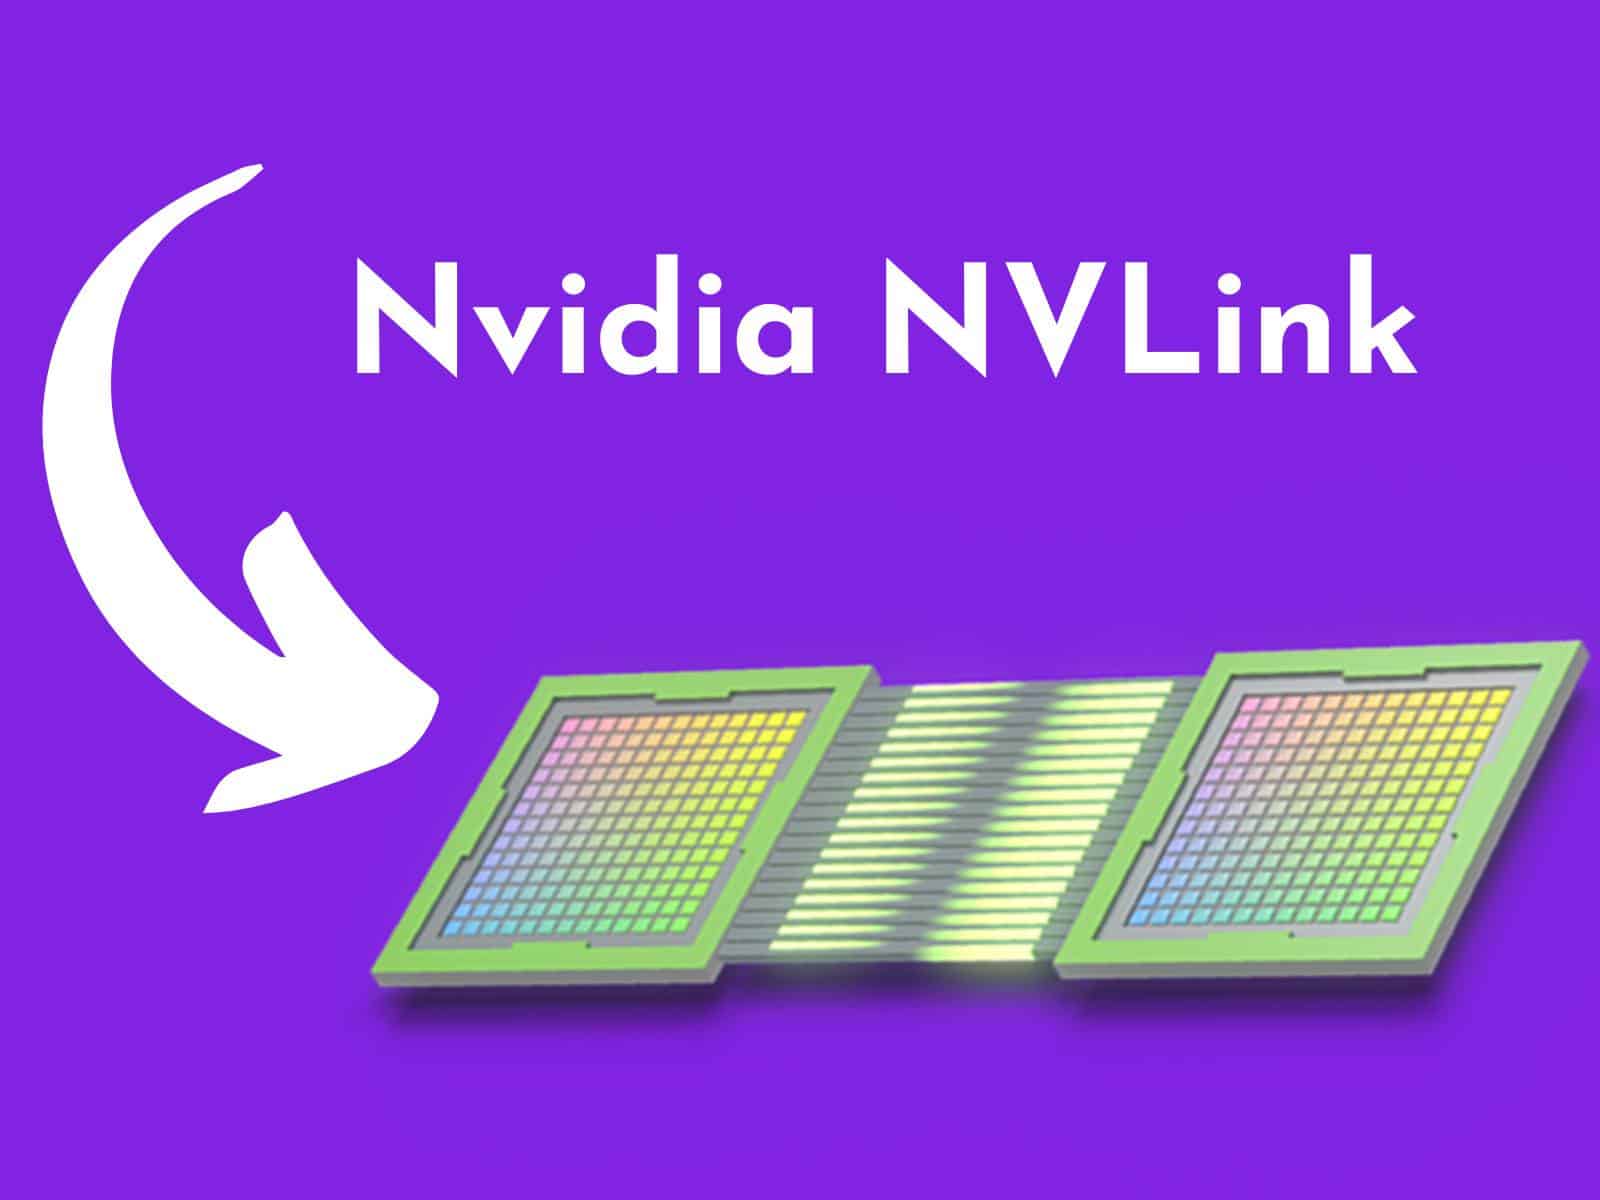 Nvidia NVLink